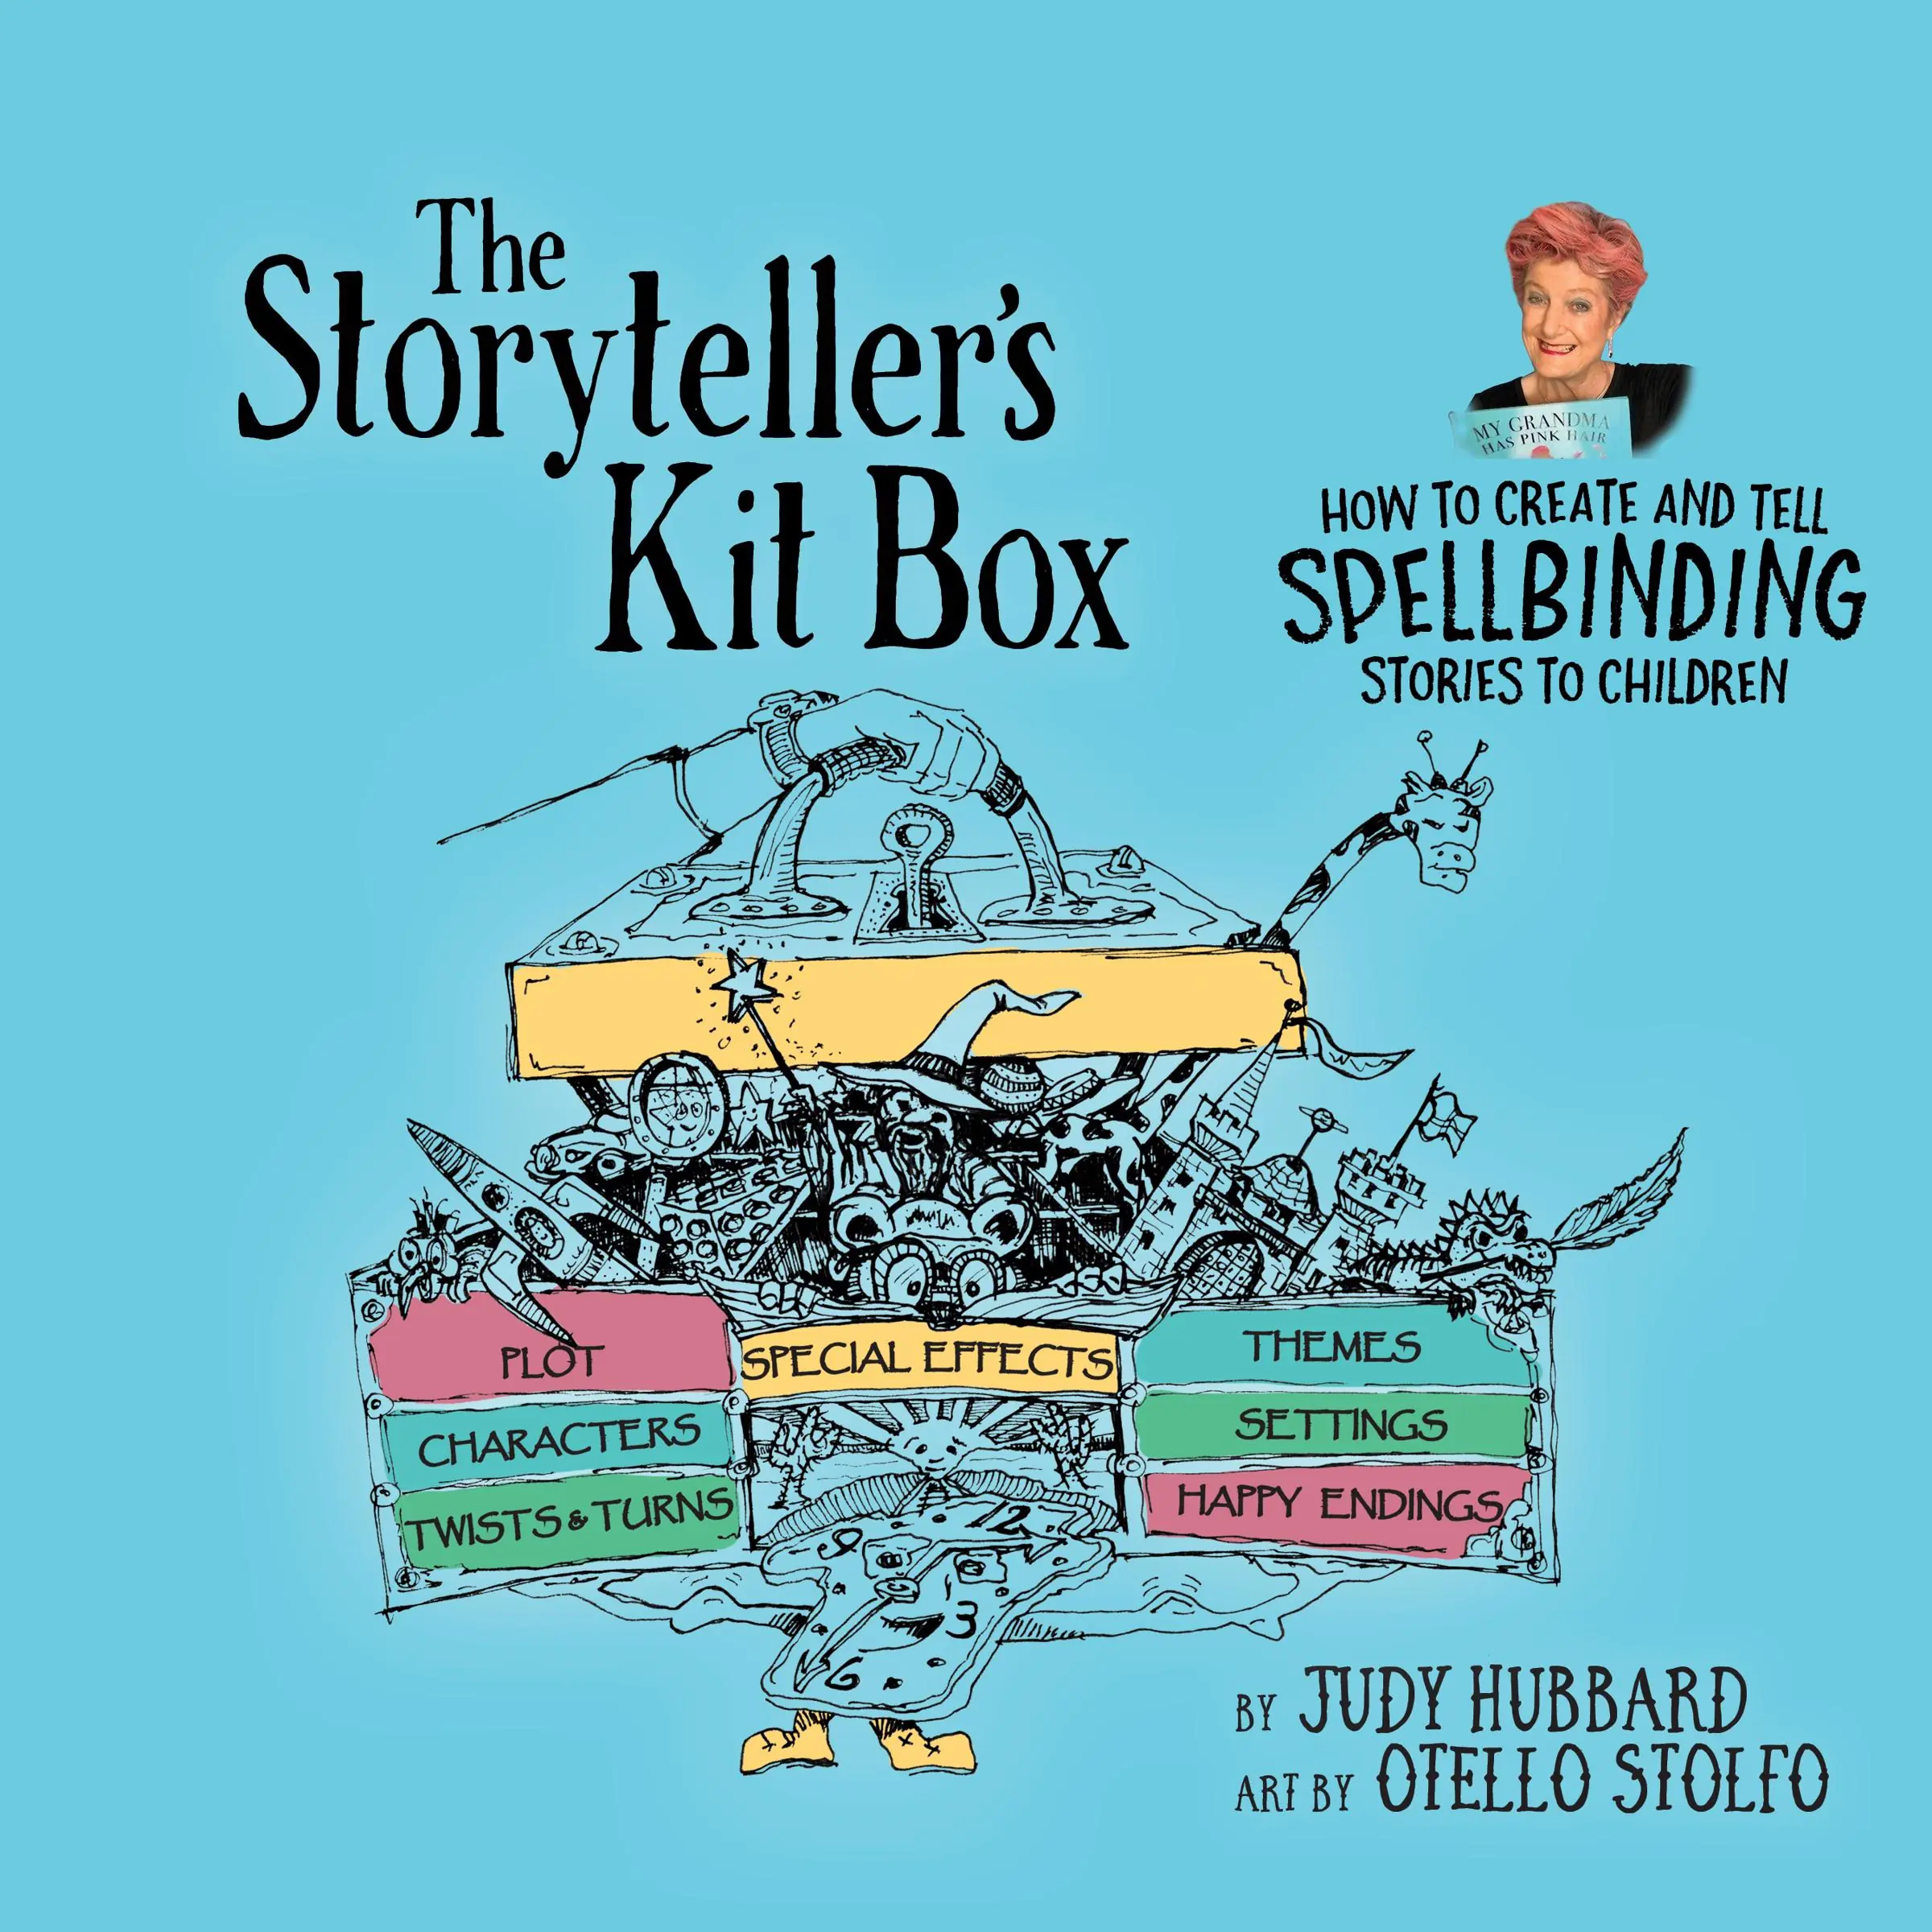 The Storyteller's Kit Box Audiobook by Judy Hubbard